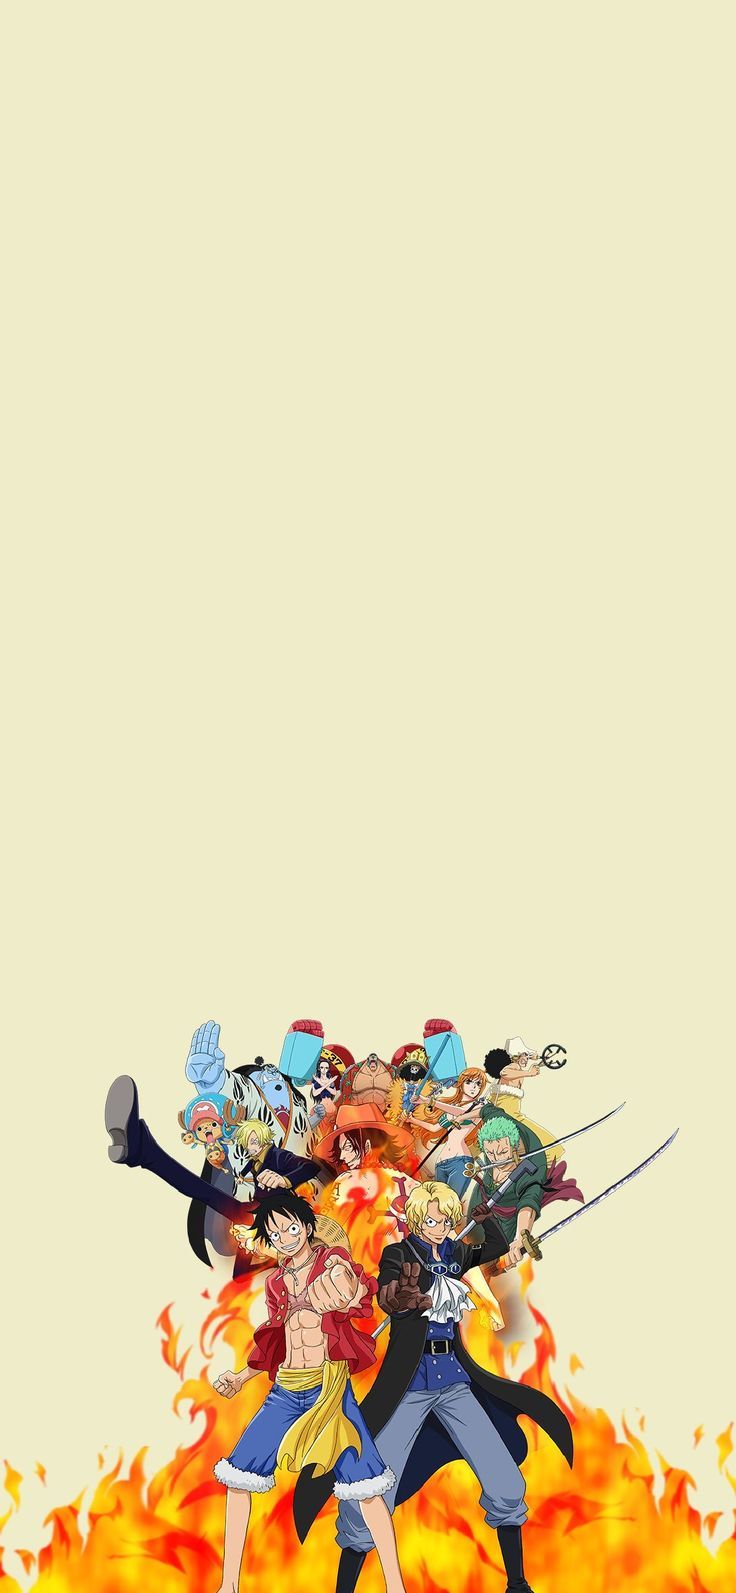 Anime wallpaper, one piece, fire, luffy, nami, sanji, zoro, chopper, boa, ace, sabo - One Piece